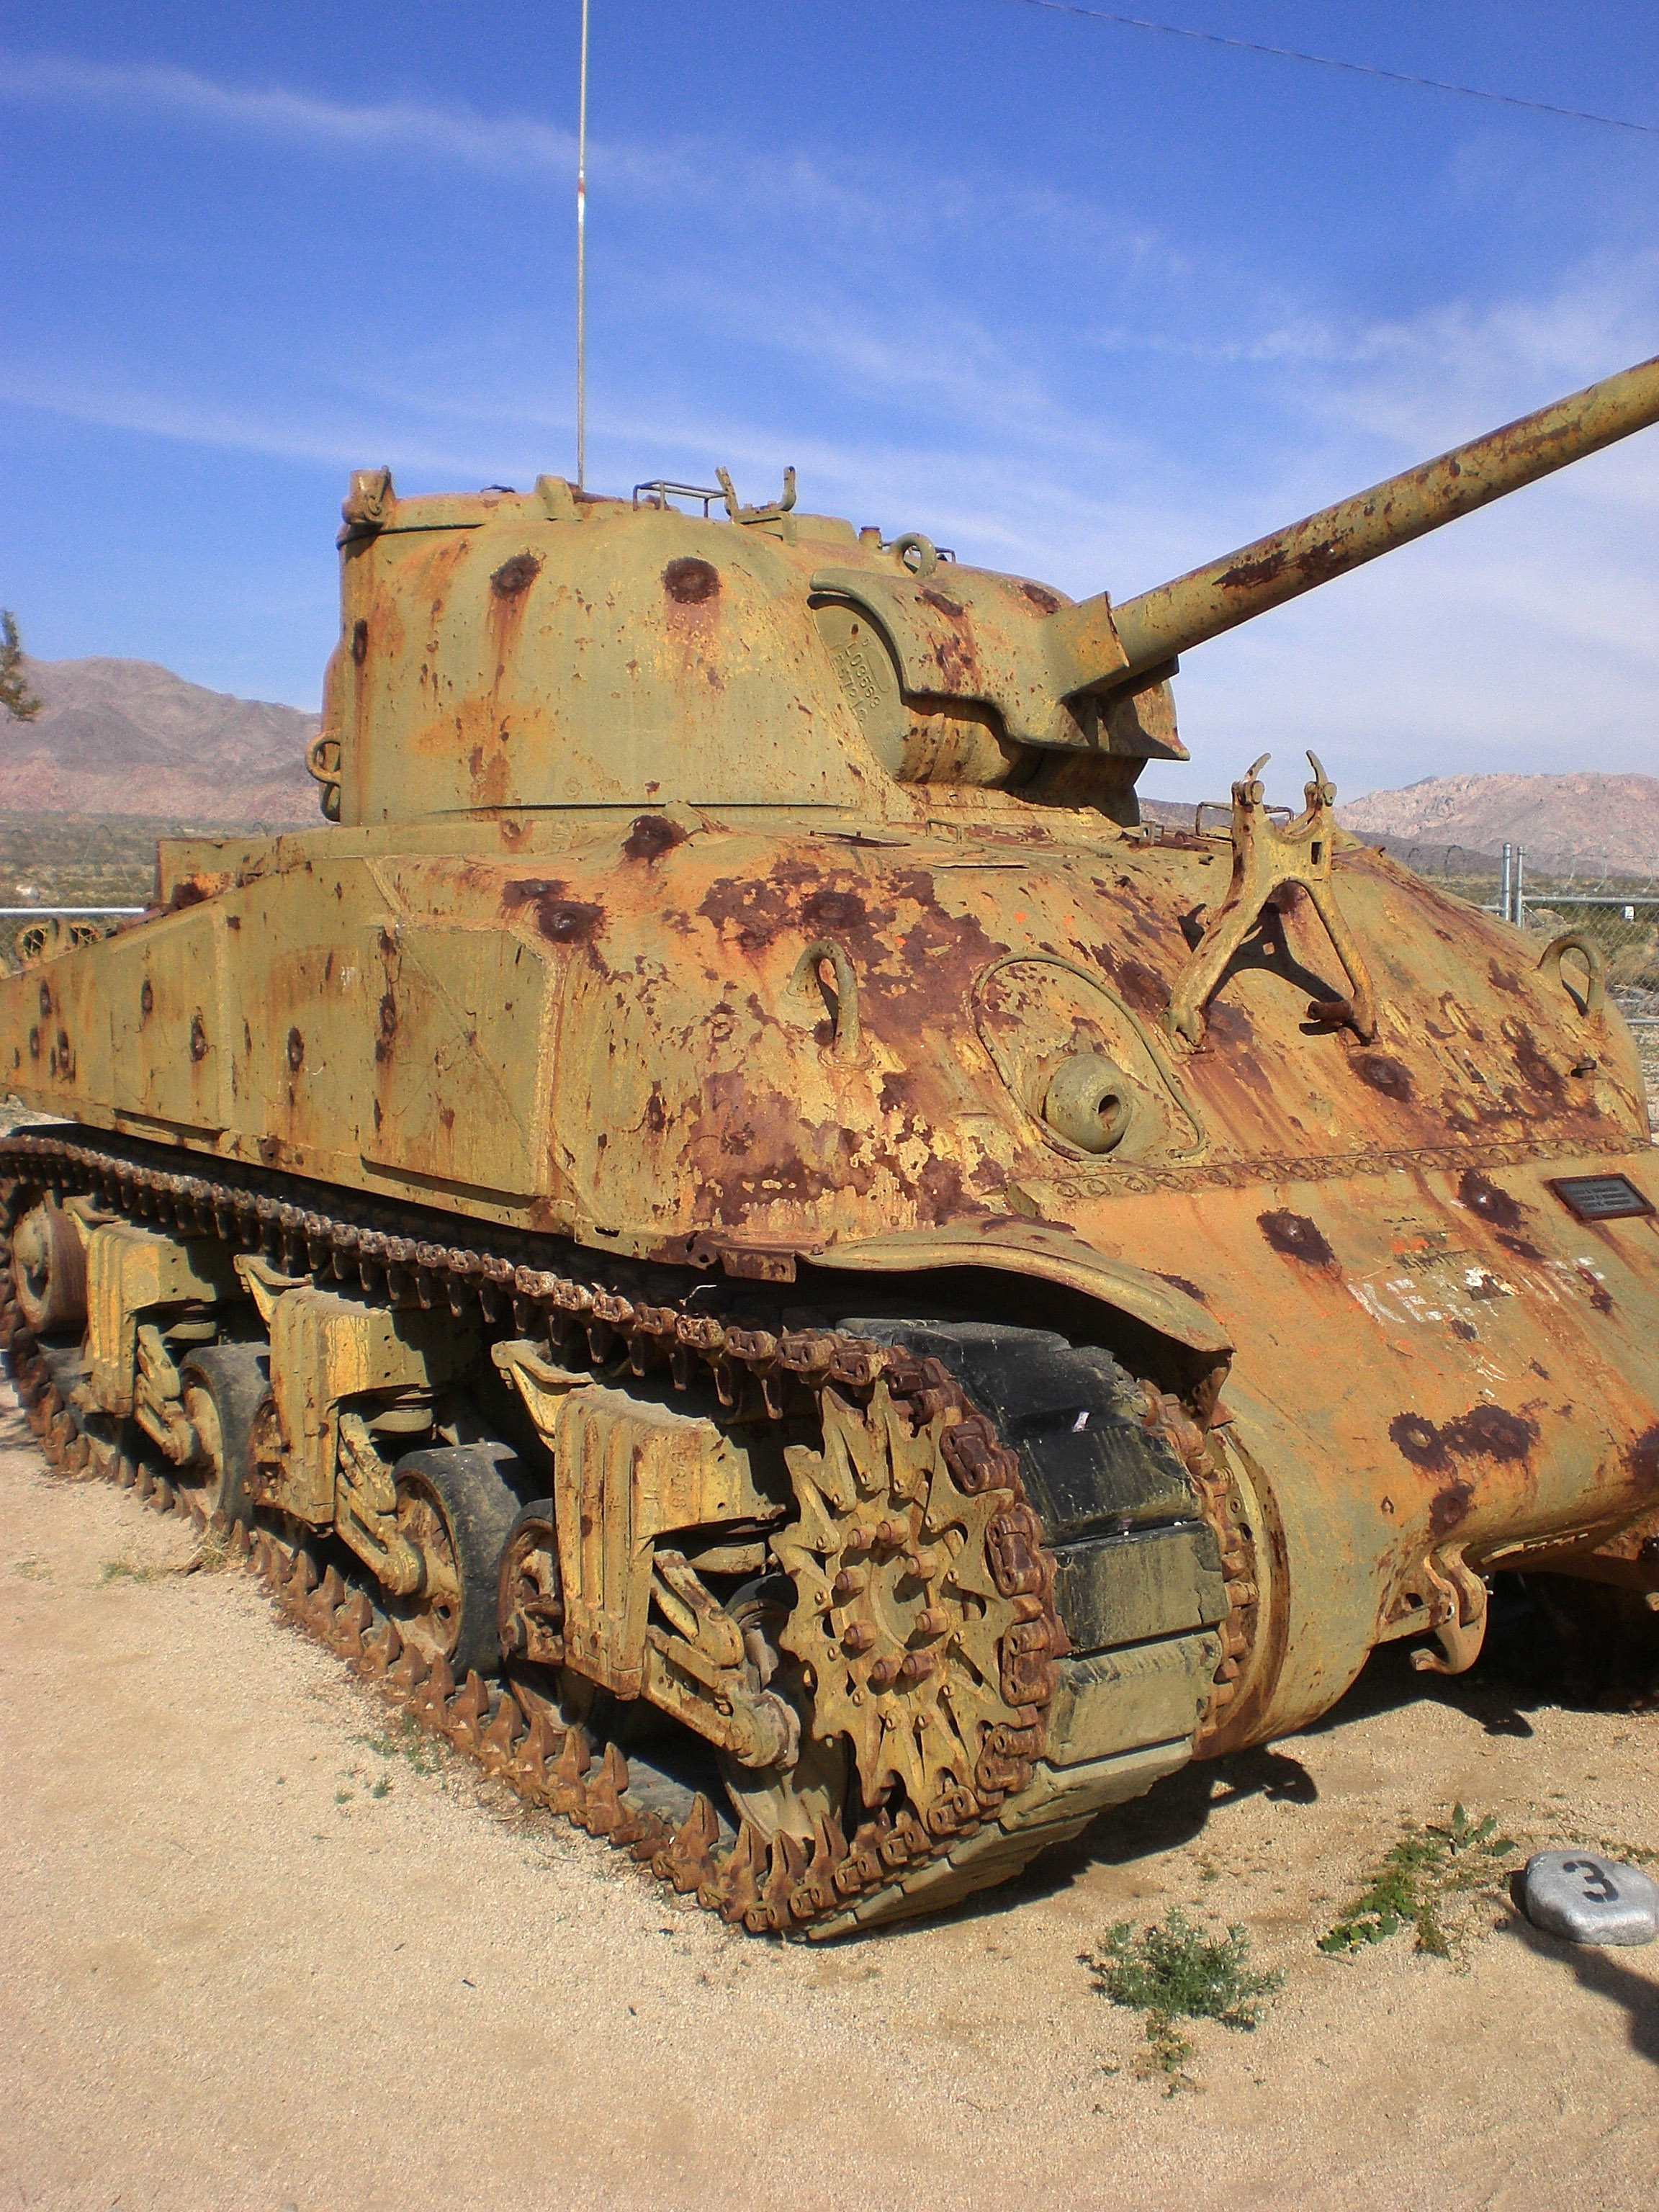 Sherman Tank closeup image - Free stock photo - Public Domain photo